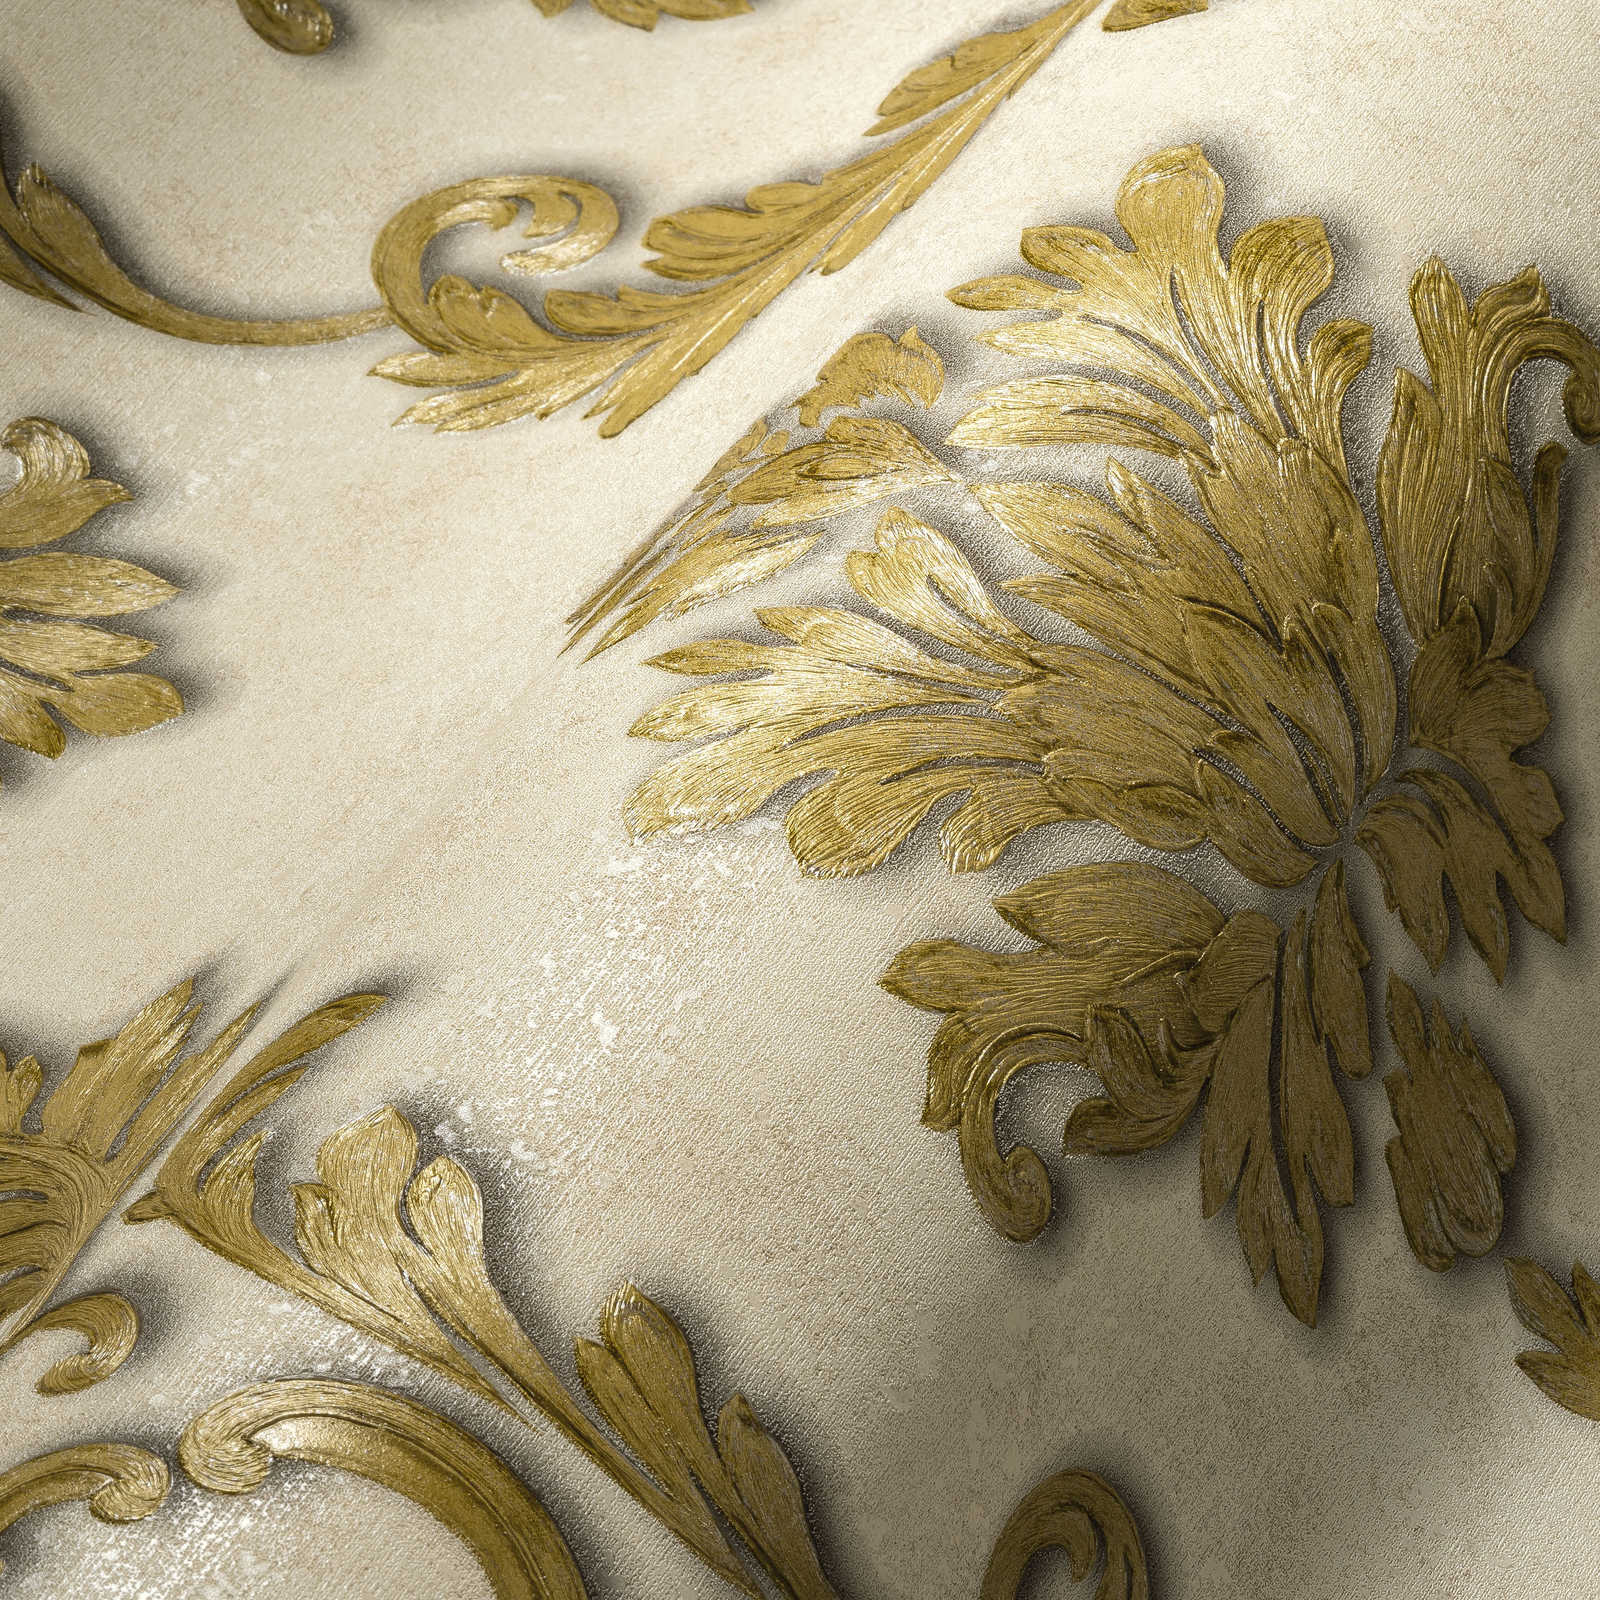             Designertapete florale Ornamente & Metallic-Effekt – Creme, Gold
        